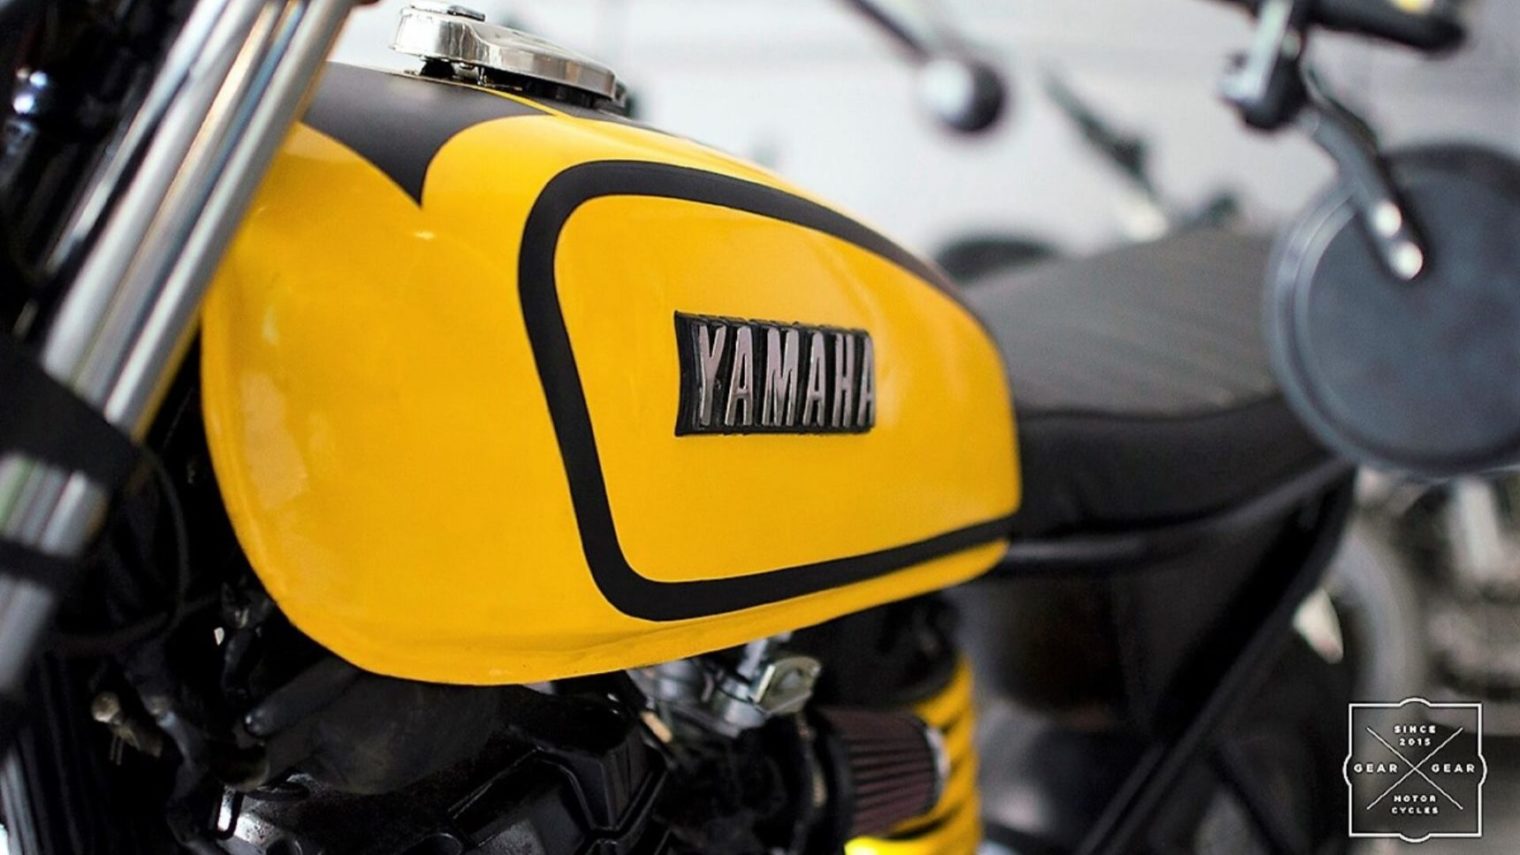 Yamaha Fz16 Transformed To Look Like The Legendary Rx 100